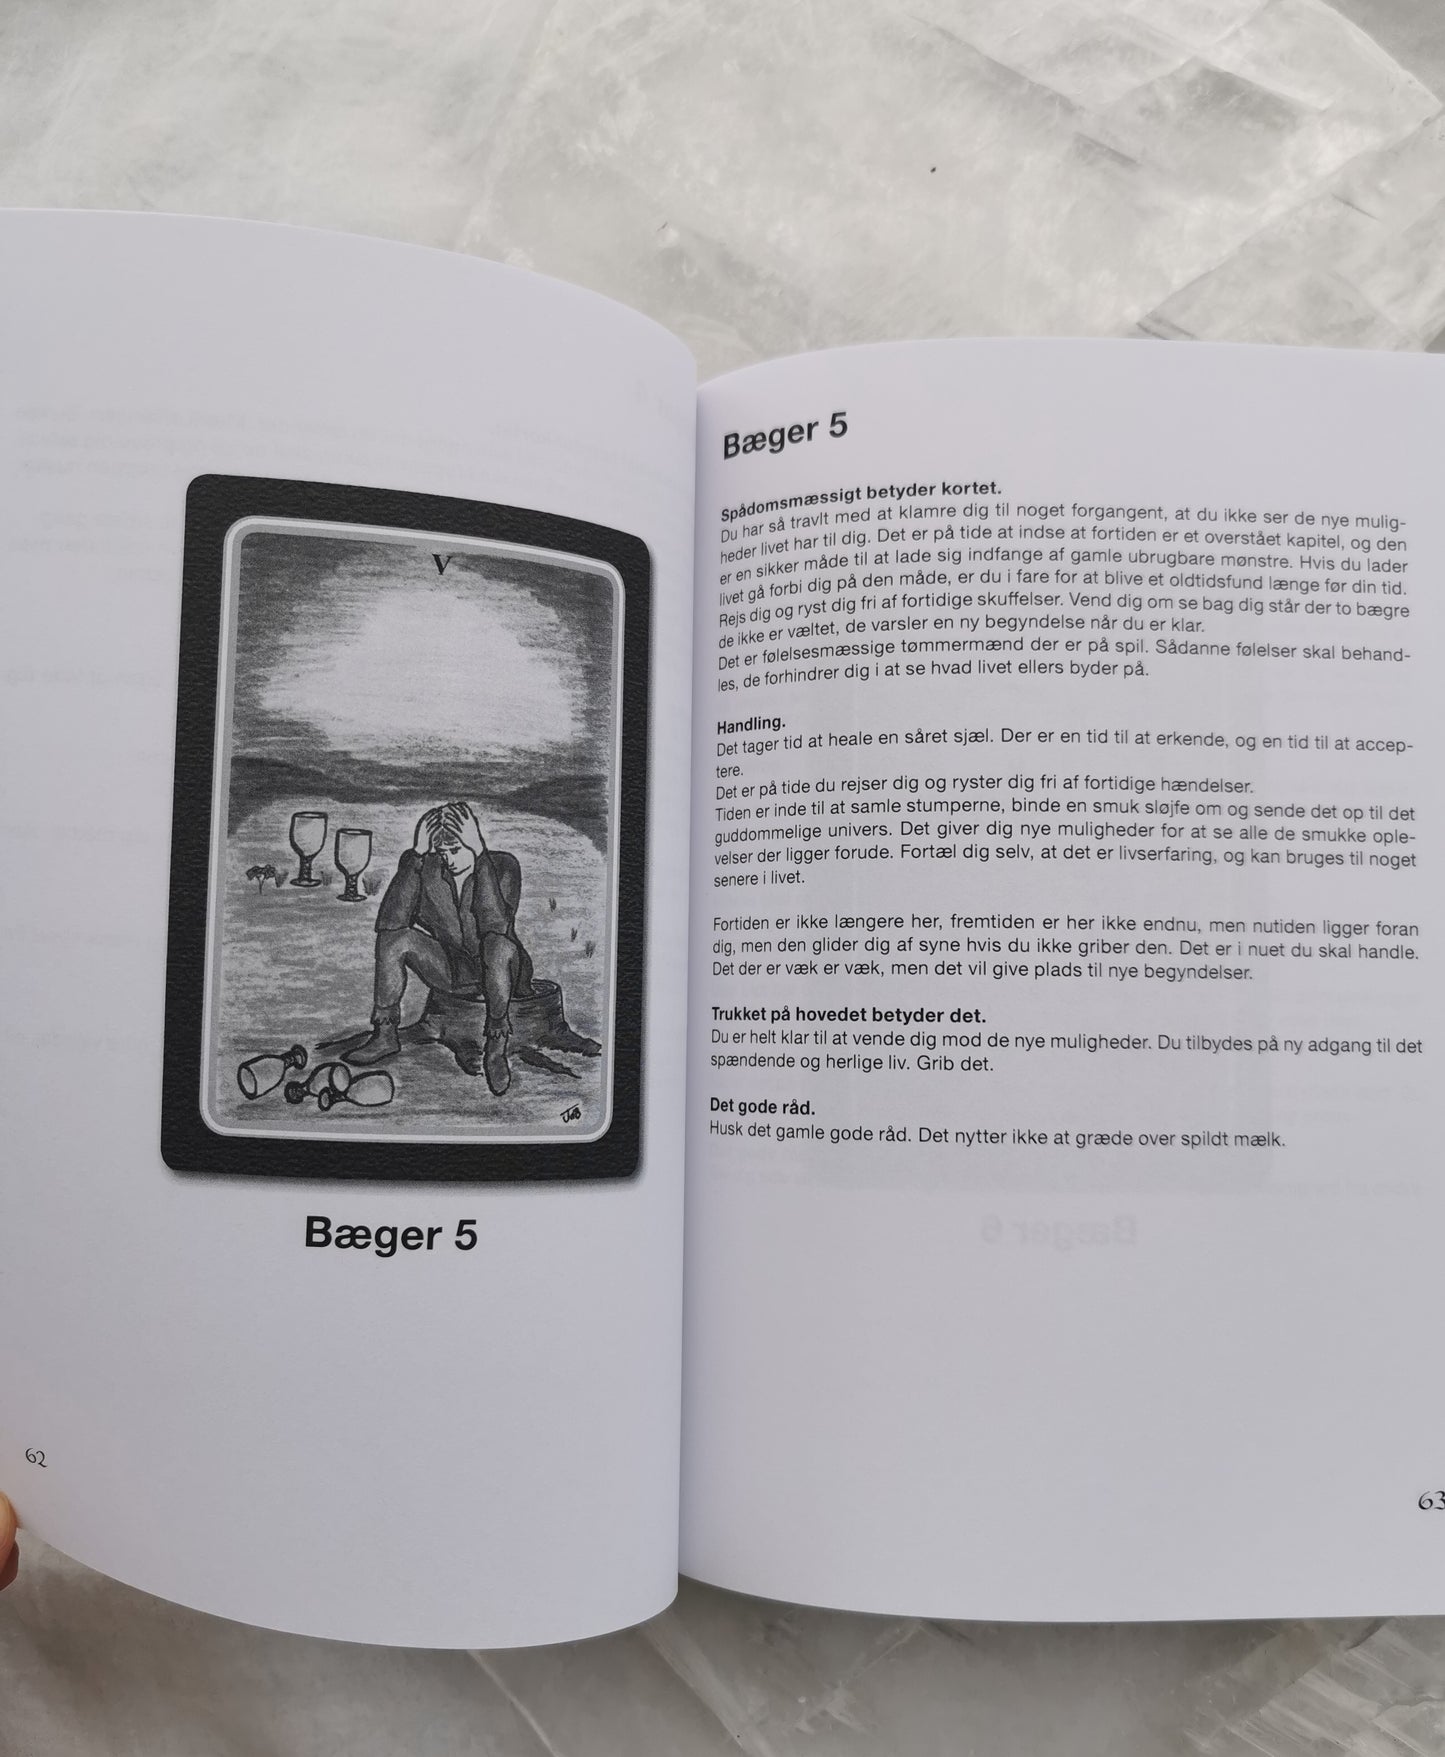 'Tromborg's Little Tarot School - Textbook' by Birgith Tromborg